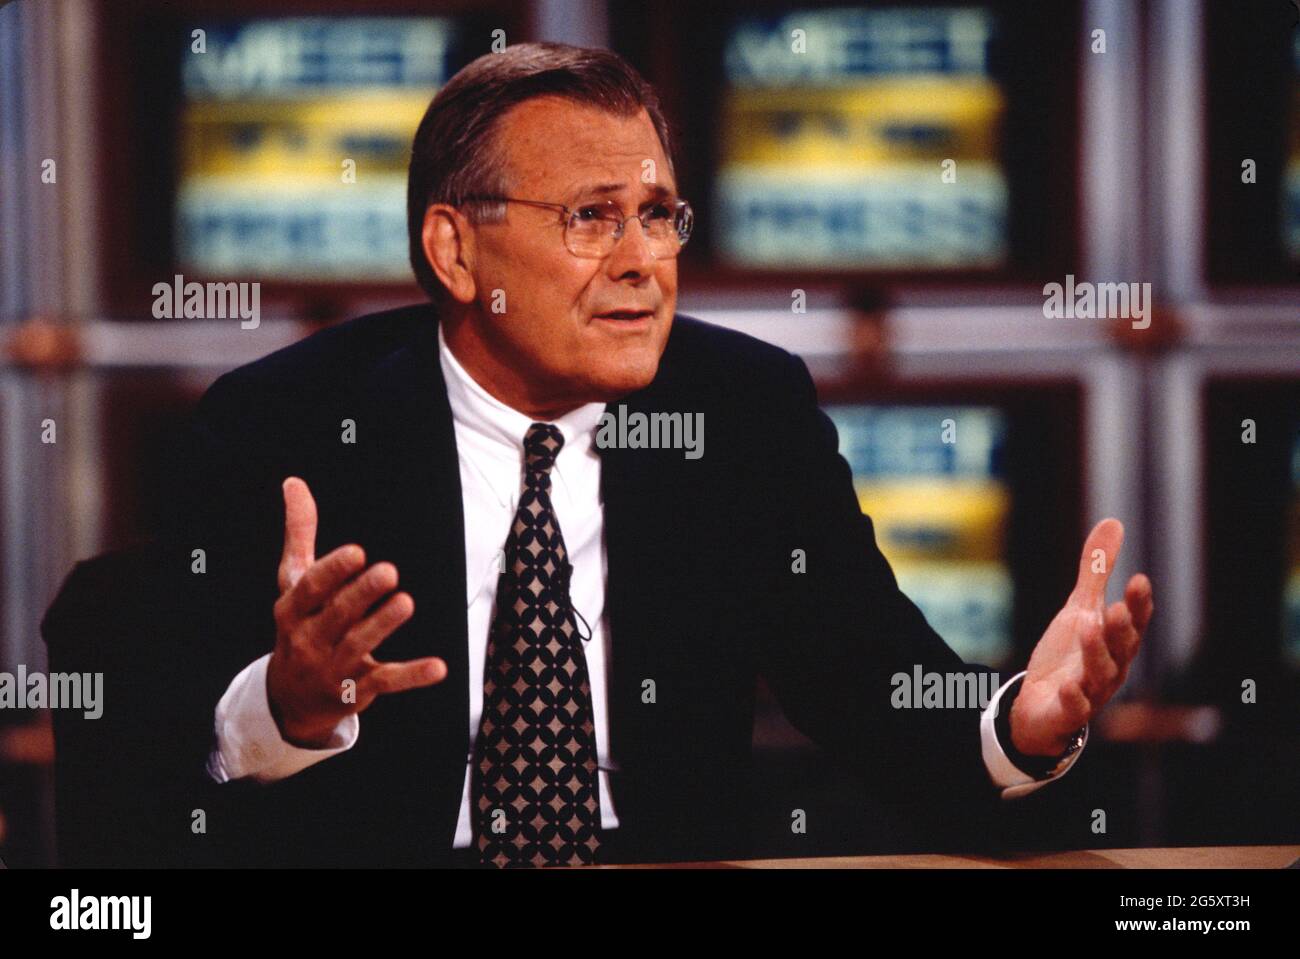 US Secretary of Defense Donald Rumsfeld appears on NBC Show 'Meet the Press' in Washington, DC. Stock Photo